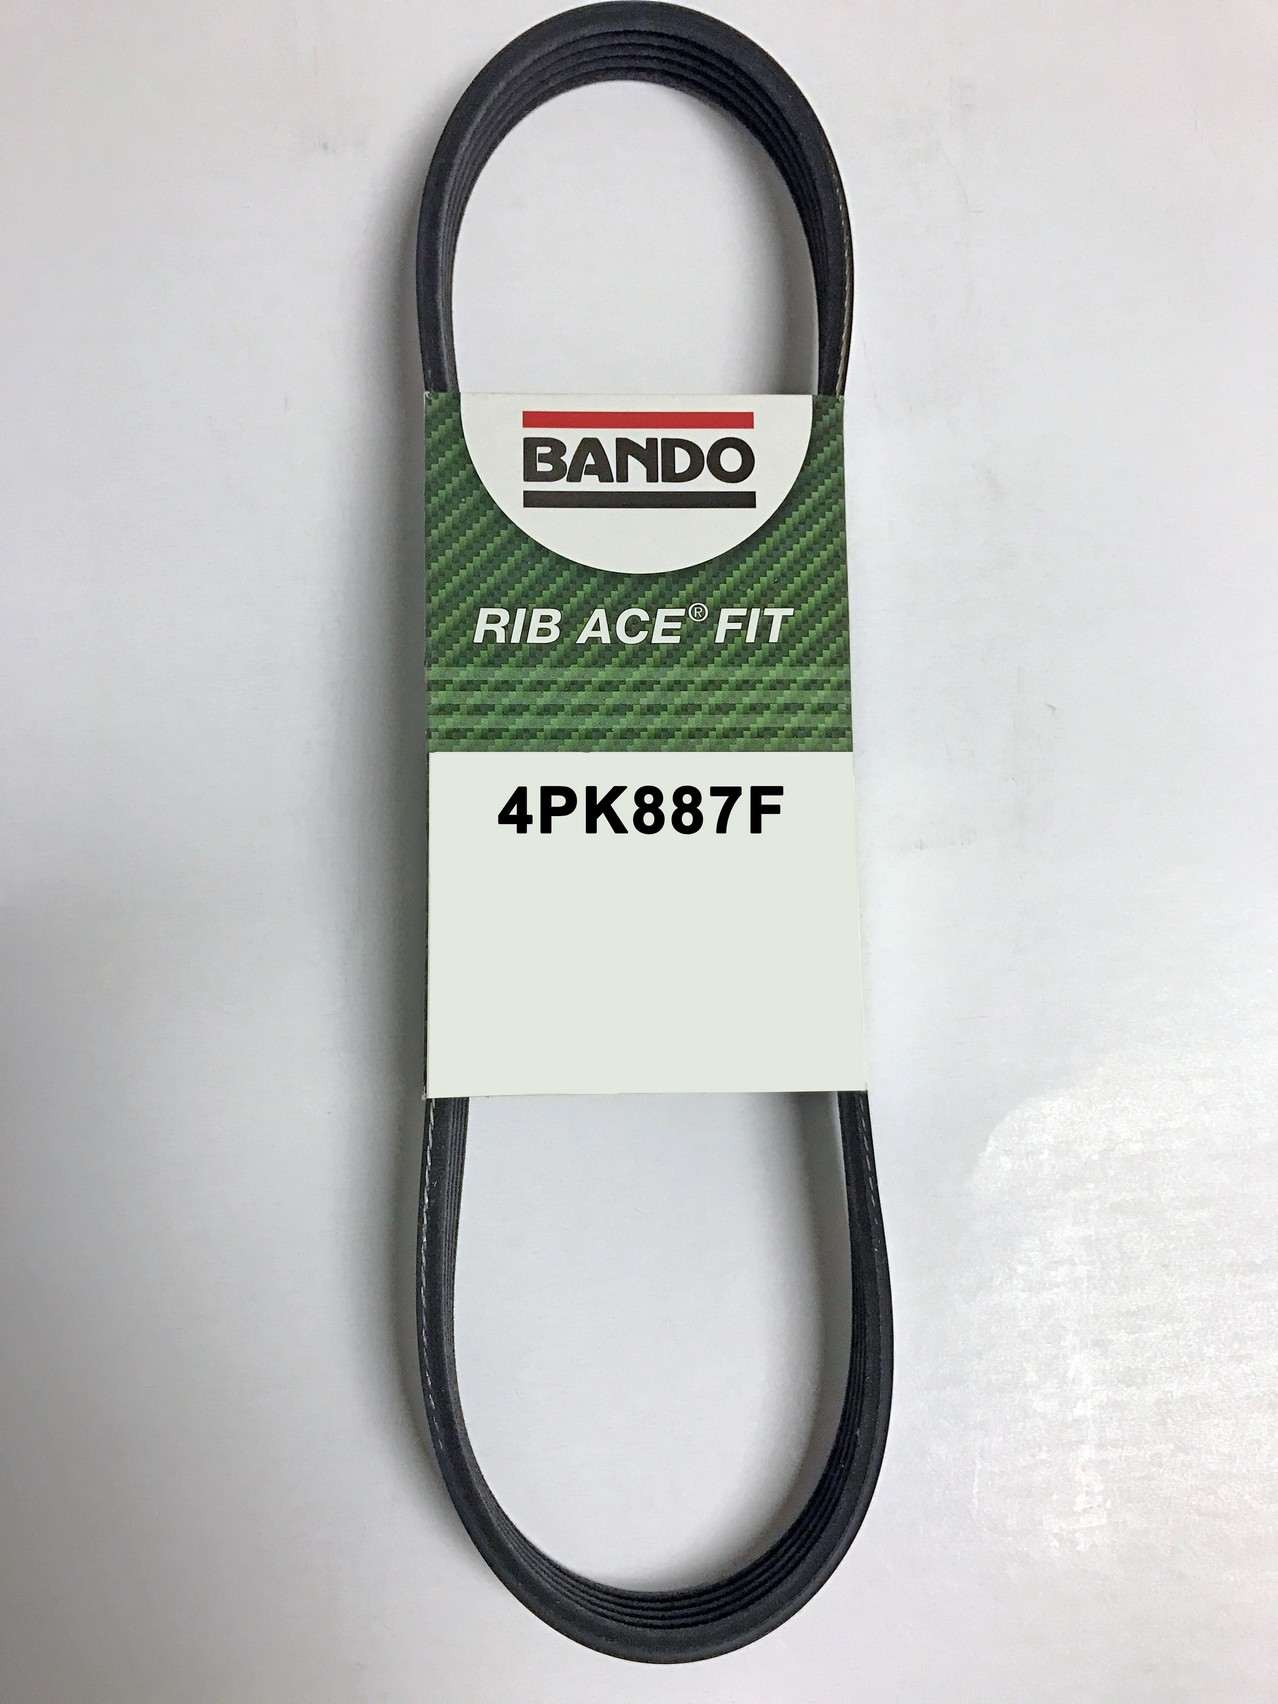 Bando Accessory Drive Belt  top view frsport 4PK887F